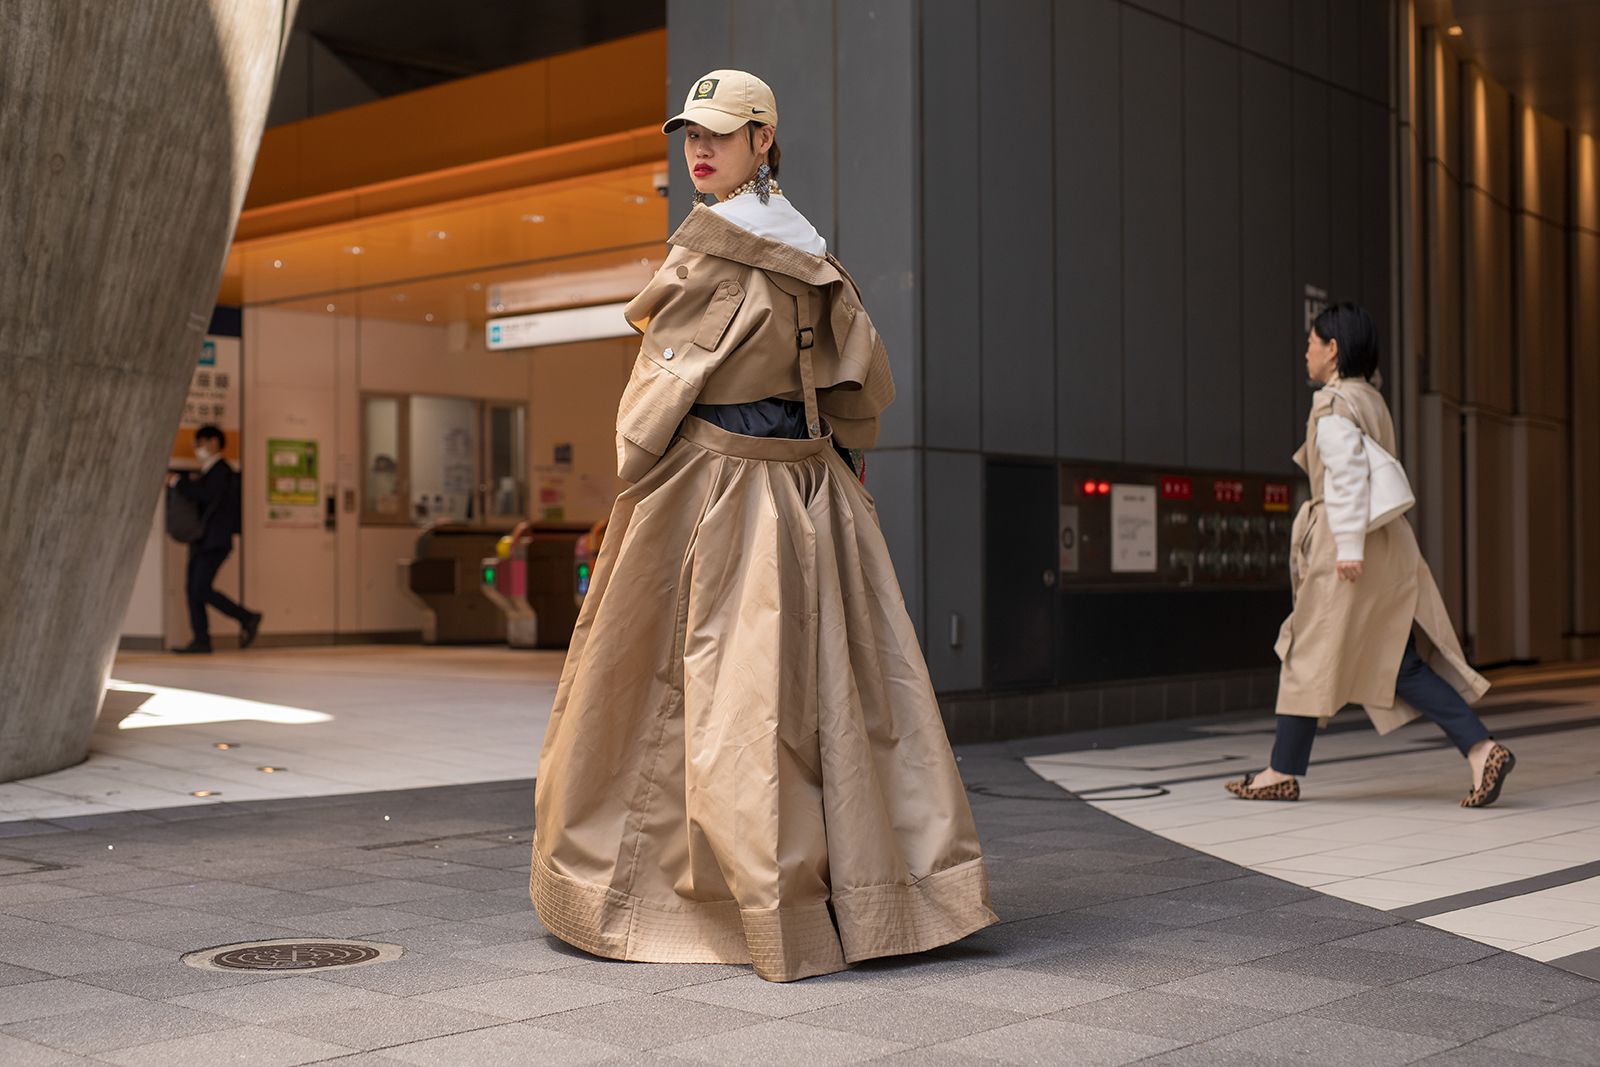 Tokyo Streetwear Style w/ Blakichy, Y-3 & Supreme – Tokyo Fashion